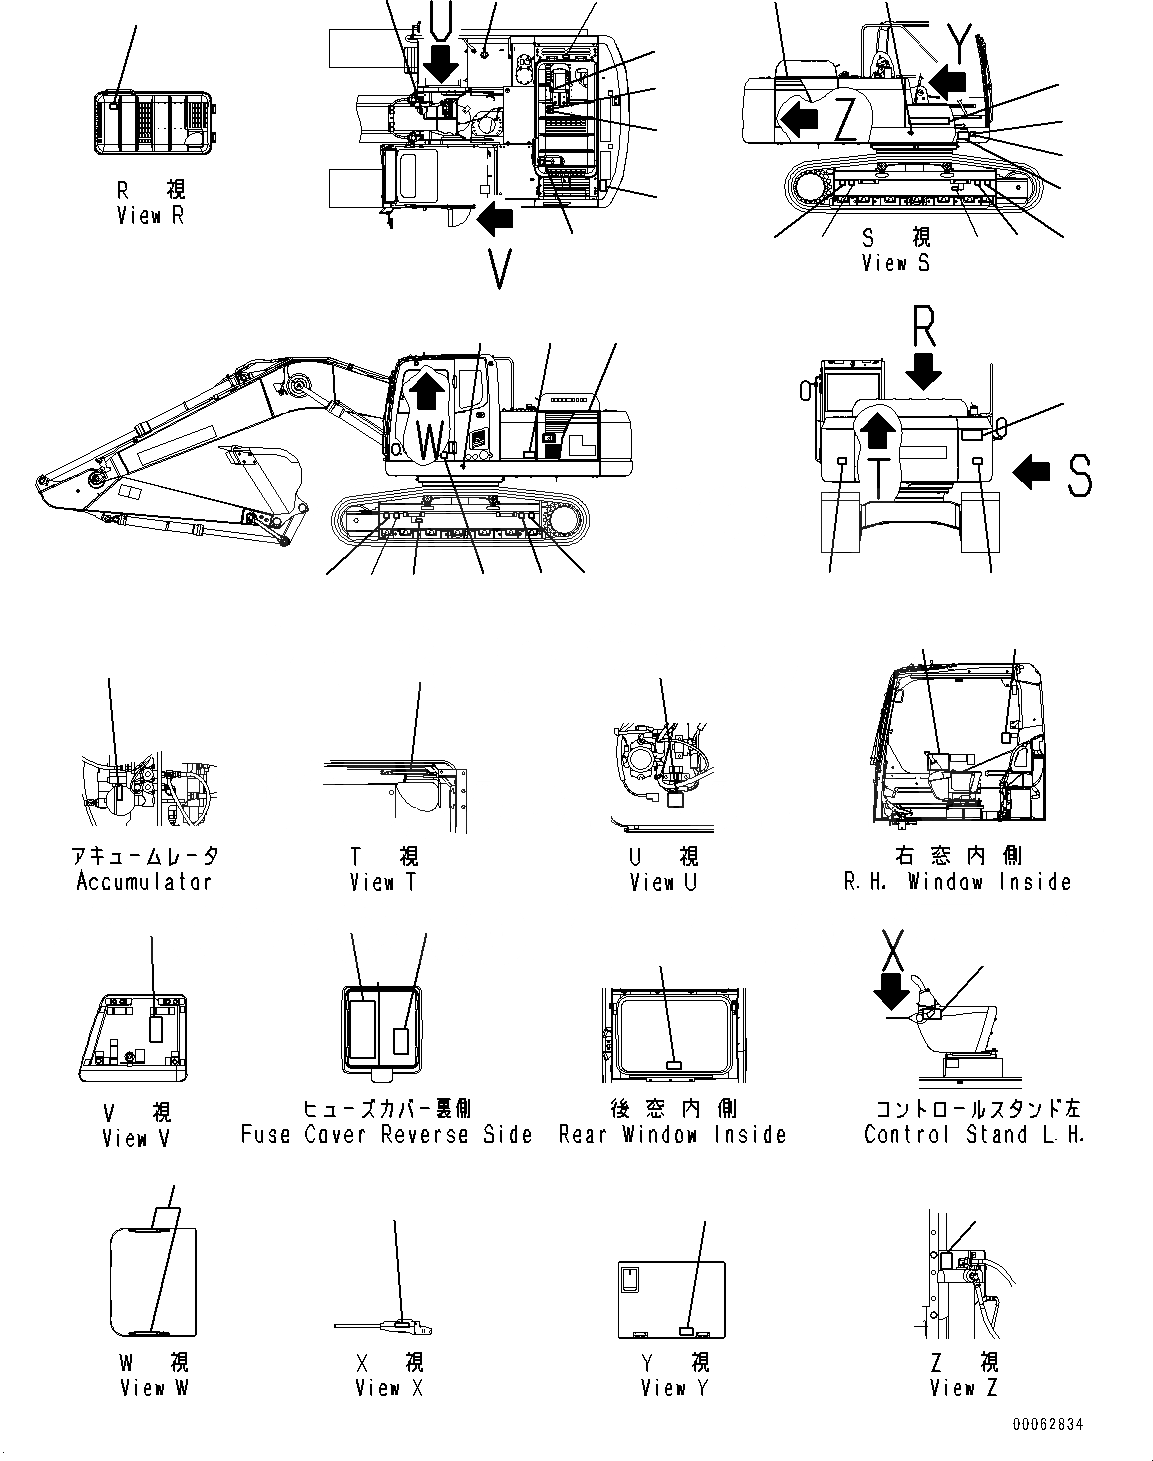 Схема запчастей Komatsu PC200LC-8 - MARKS И ТАБЛИЧКИS (№7-) MARKS И ТАБЛИЧКИS, ТУРЦИЯ-АНГЛ.